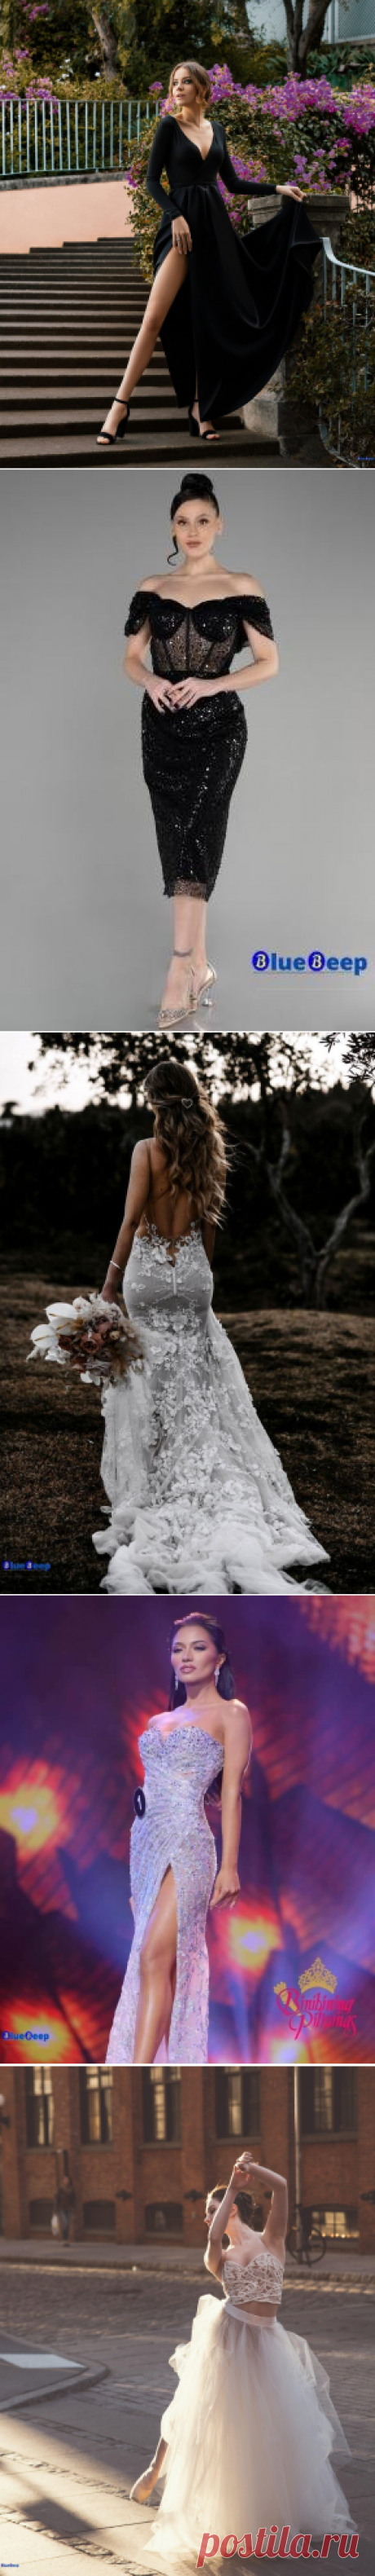 Explore the Best Wedding Dress Websites: Find Your Dream Gown Online